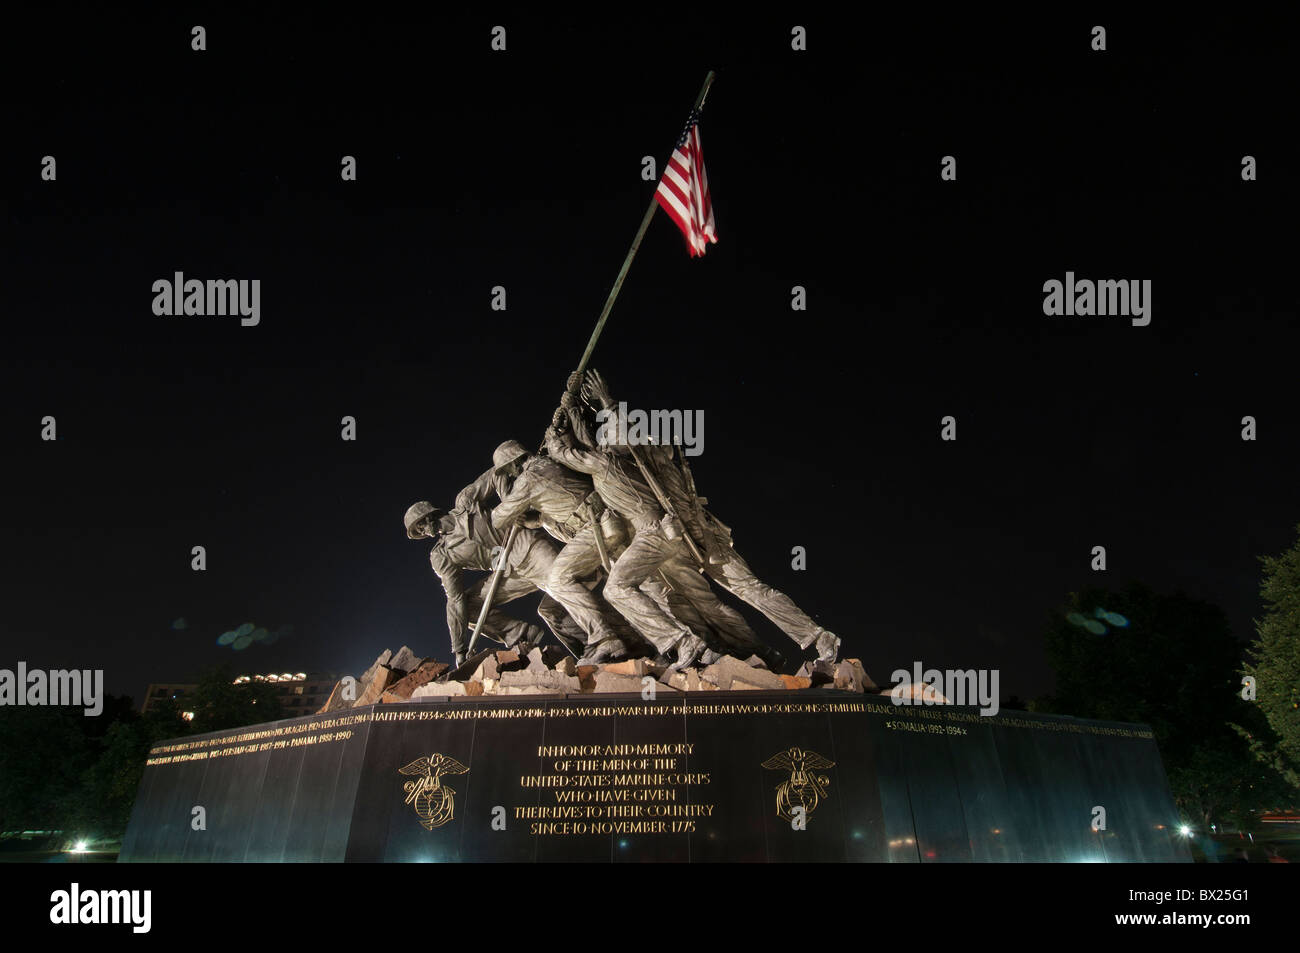 The United States Marine Corp Memorial in Arlington, VA. Stock Photo